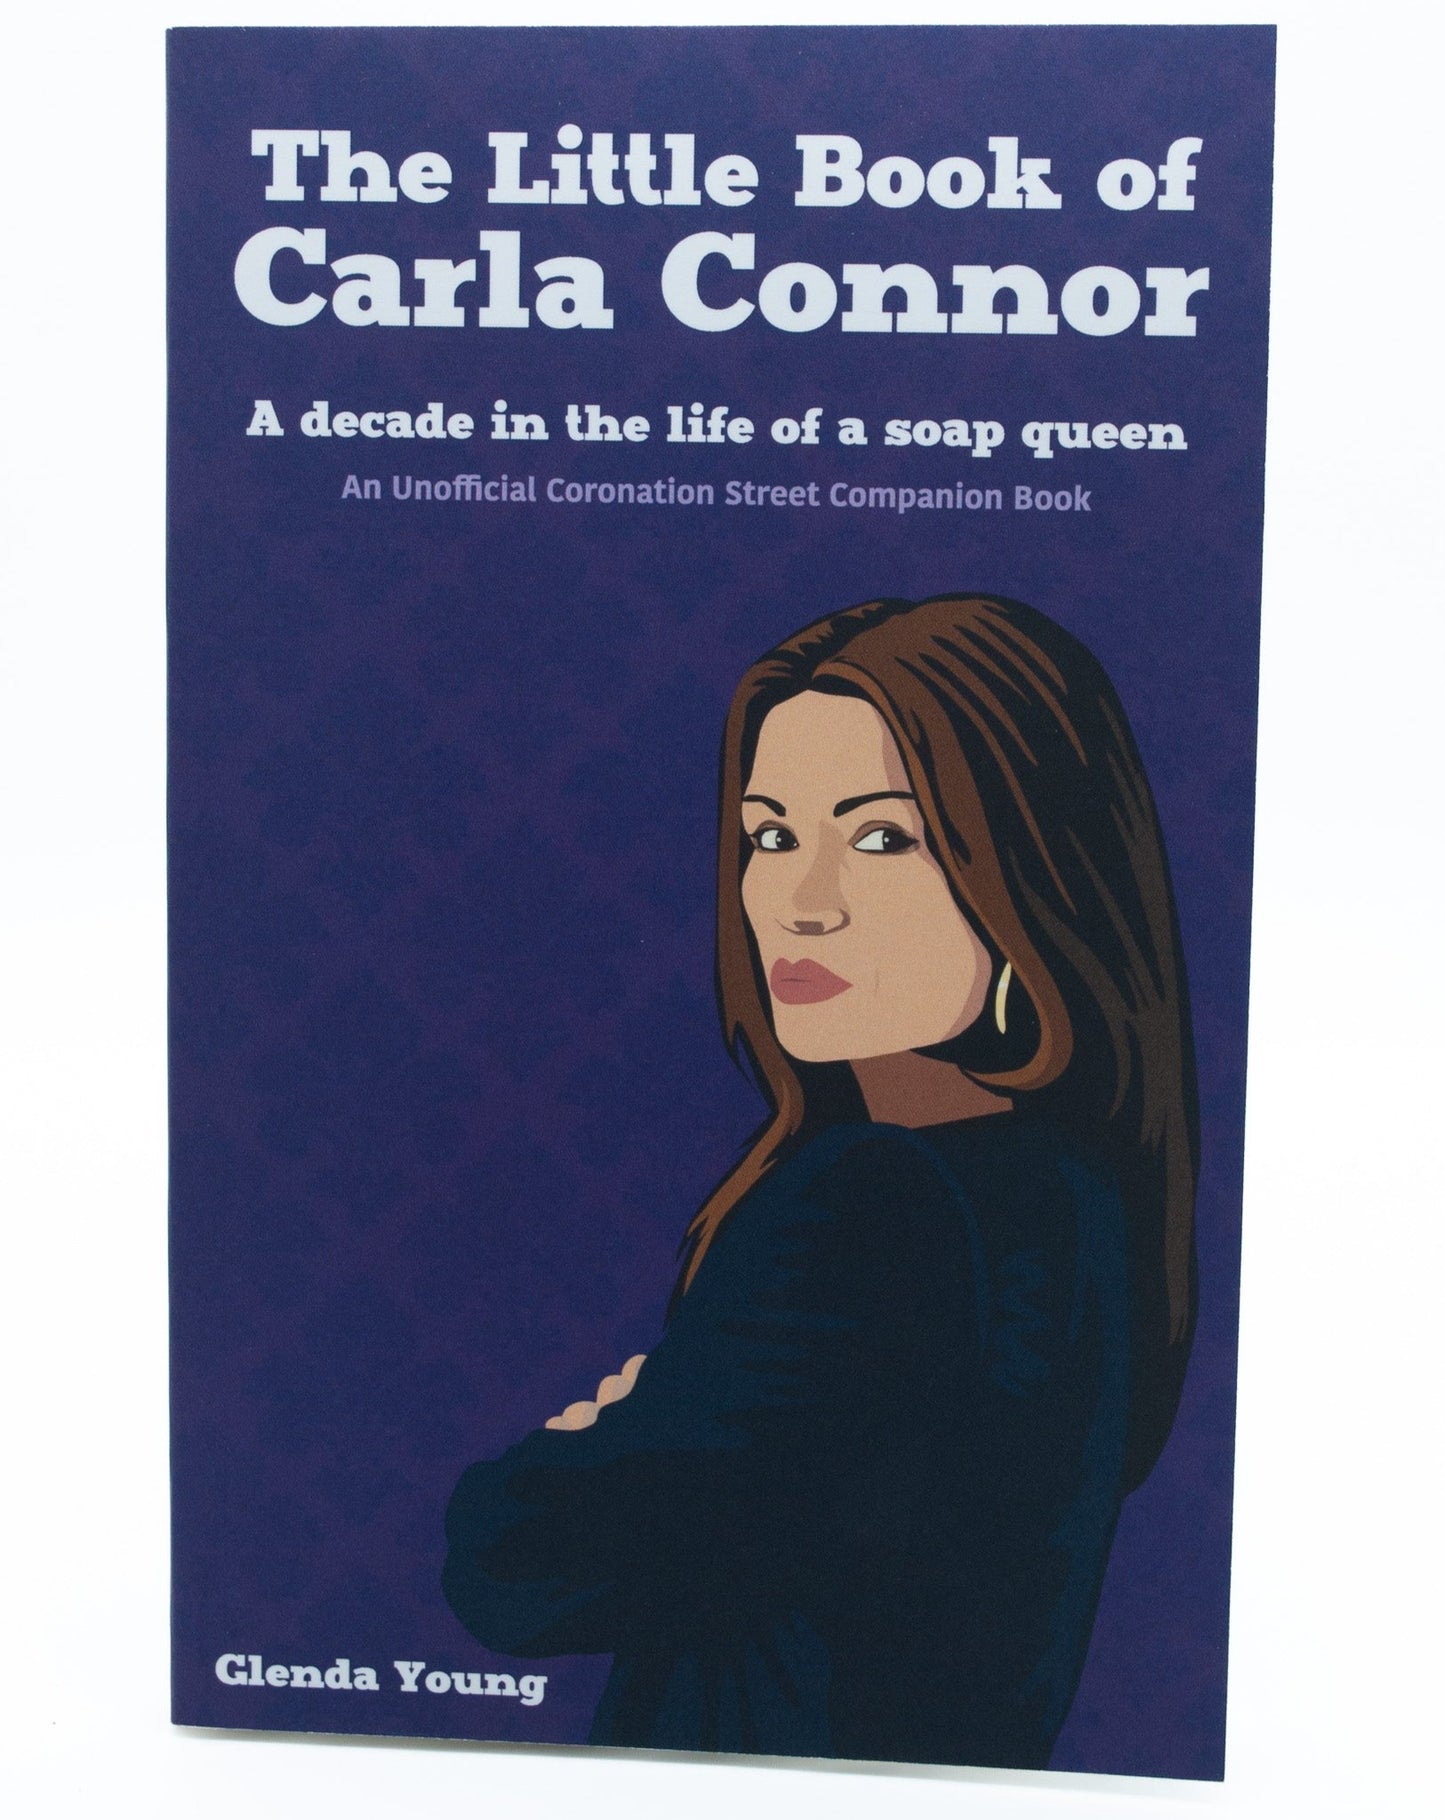 The Little Book of Carla Connor